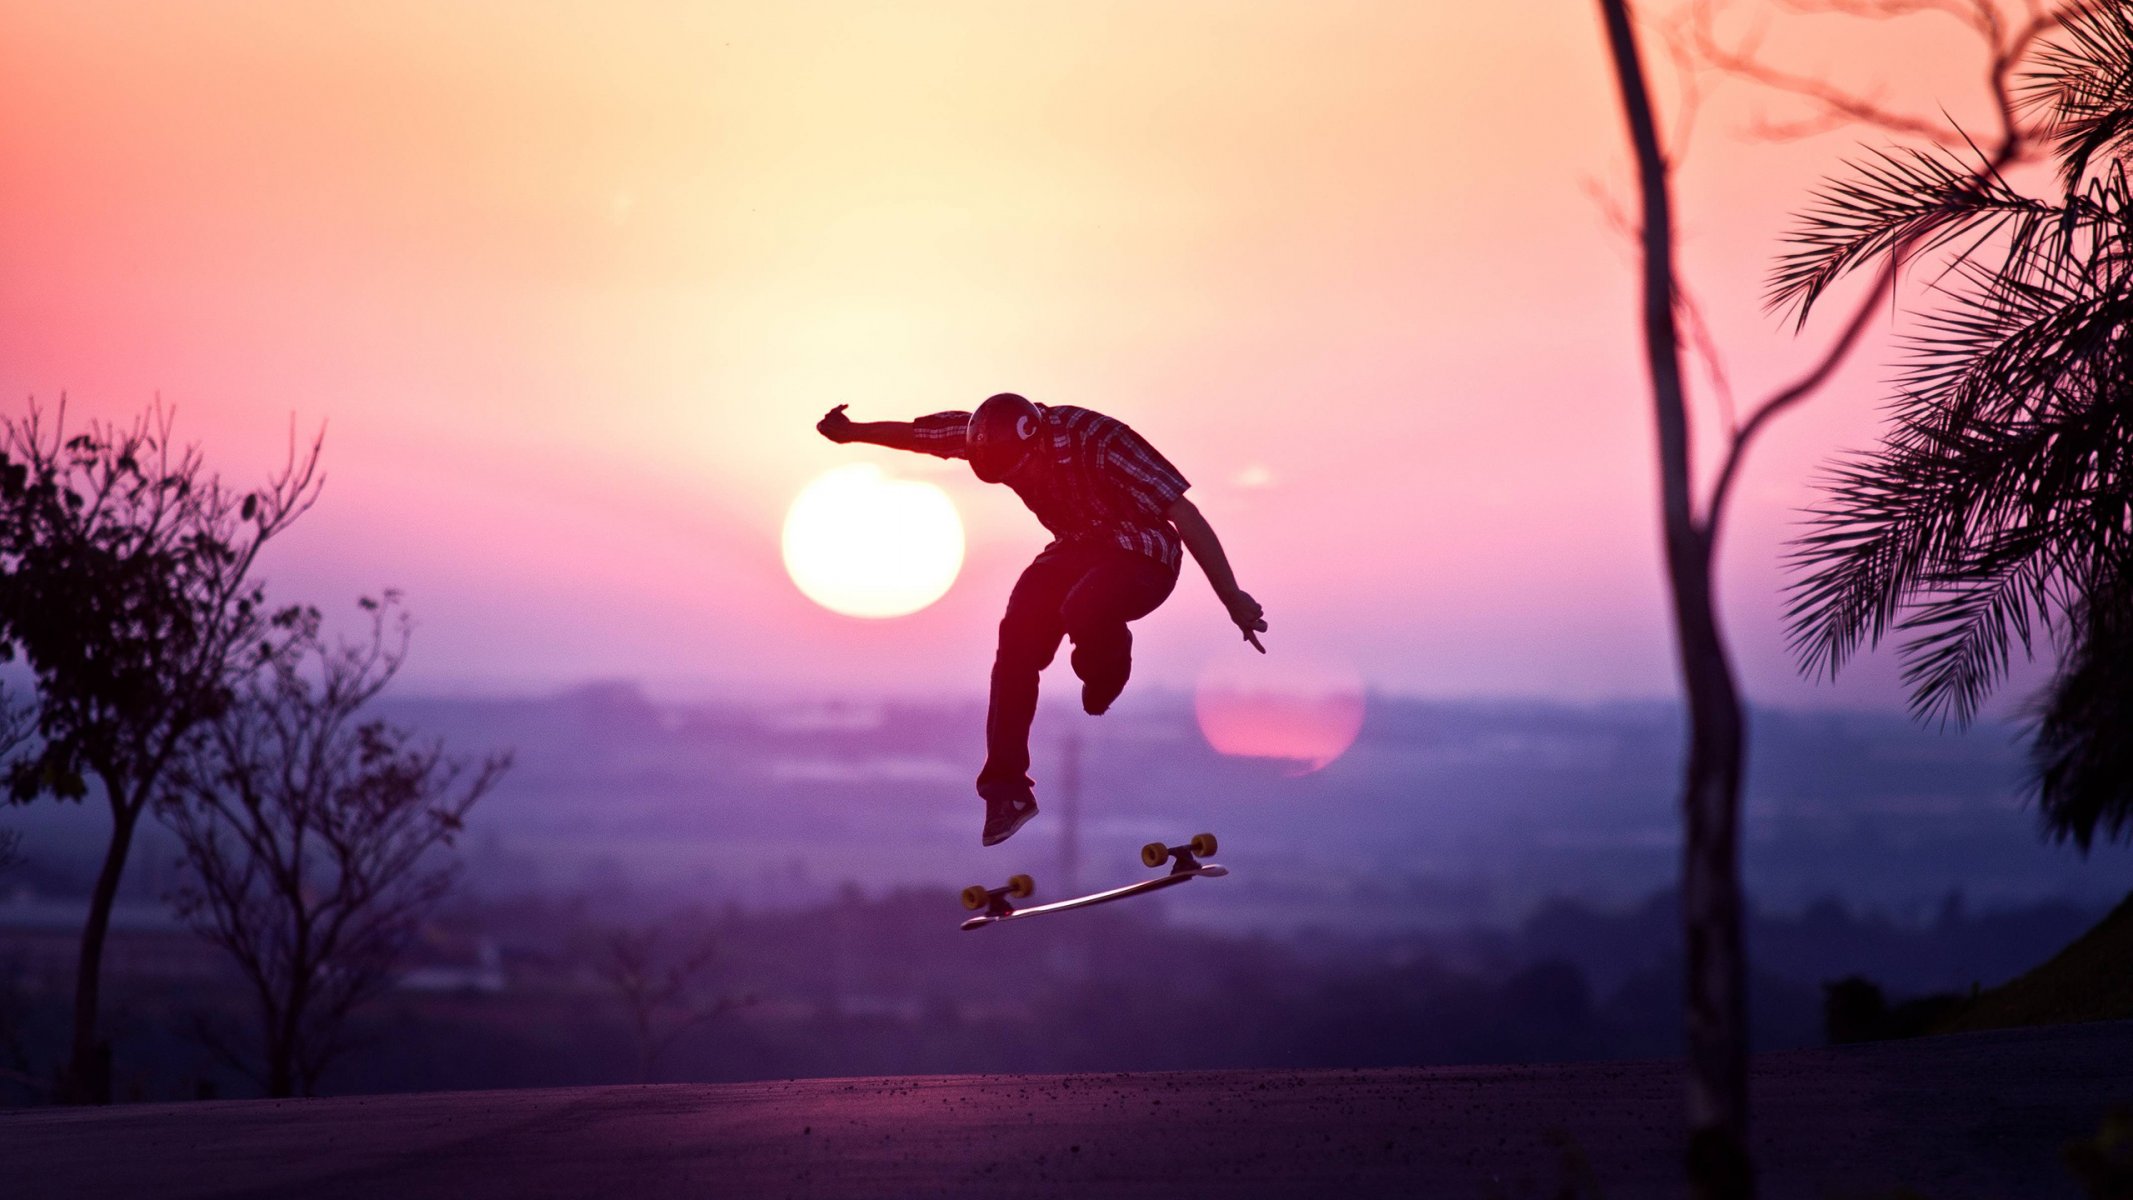 парень шлем скейтборд прыжок солнце закат